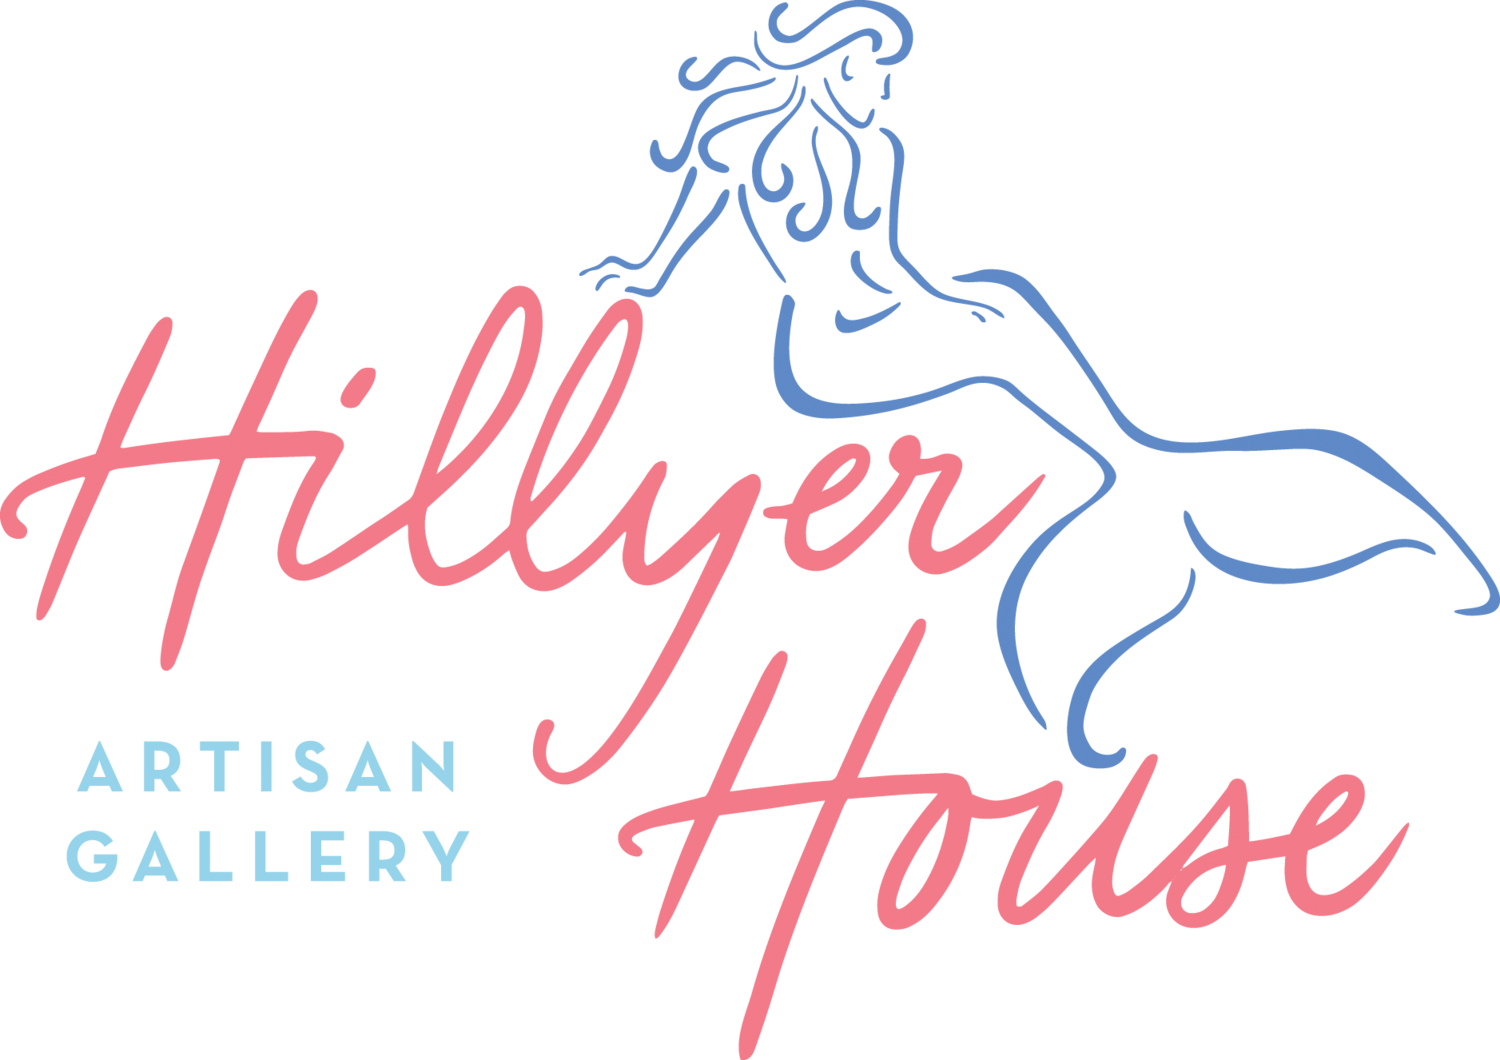 Eileen Morrison Designs Gold White Wine Glass — Hillyer House